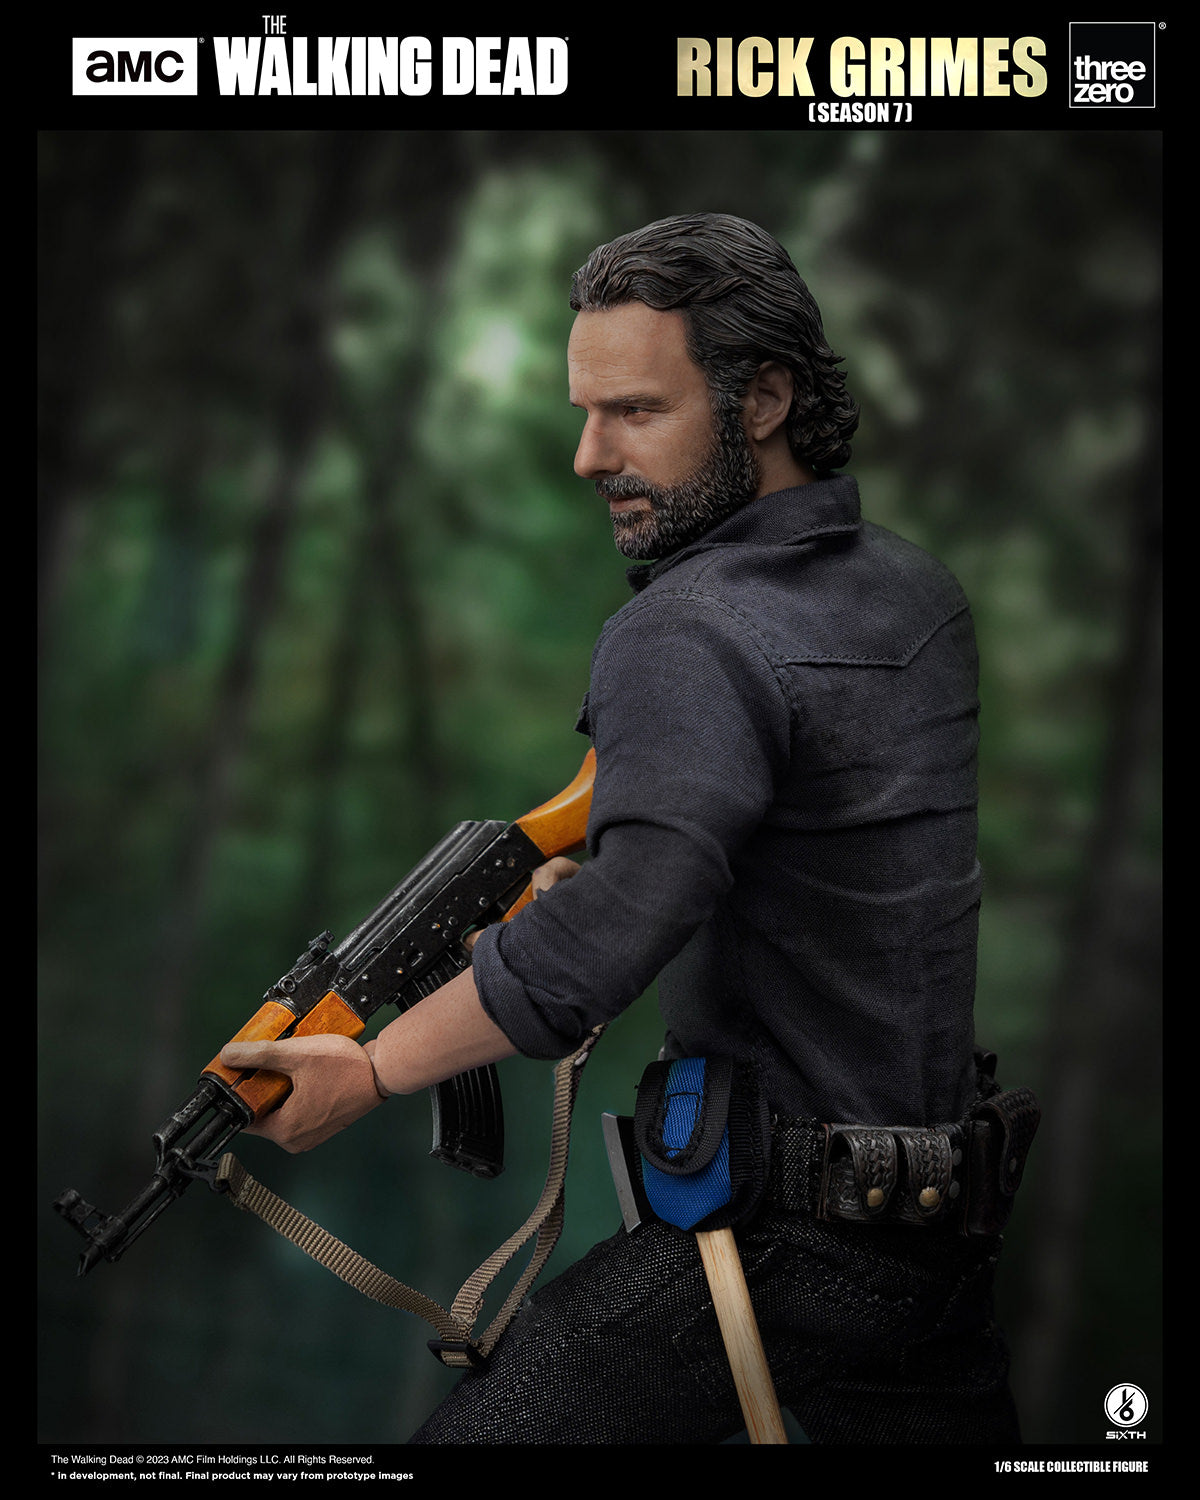 The Walking Dead Rick Grimes Season 7 Sixth Scale Figure